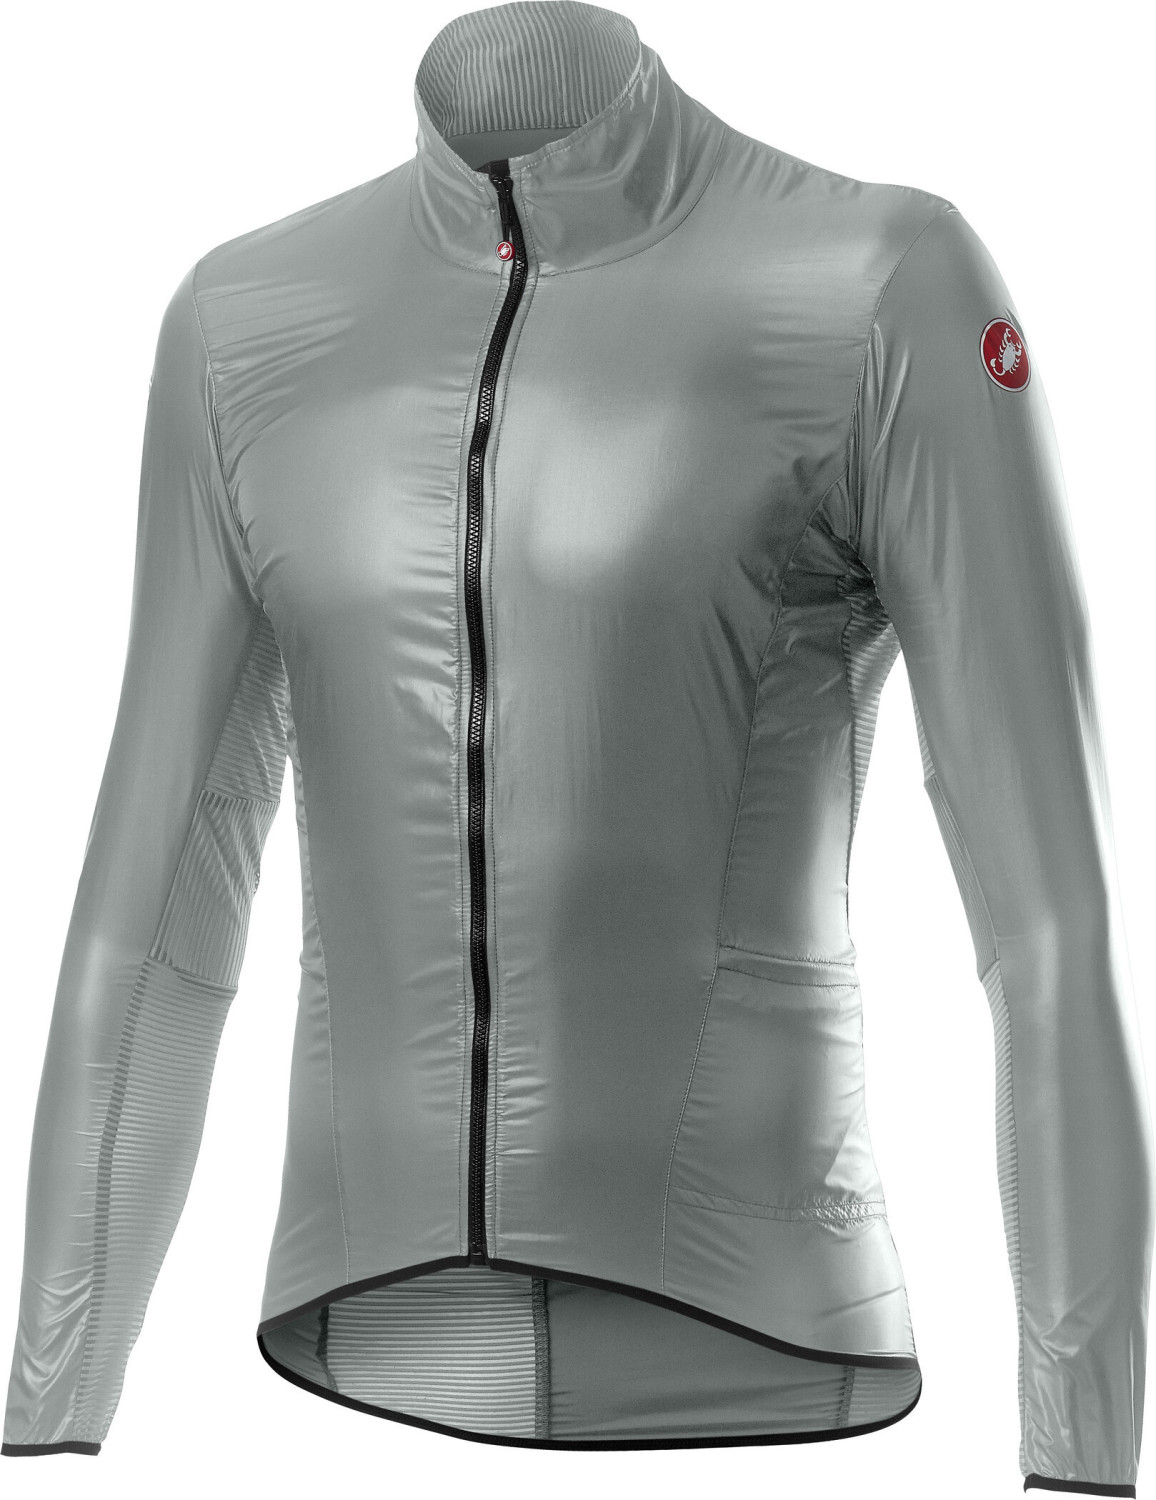 Castelli Aria Shell jacket Men's silver/gray desde 94,99 € | Compara